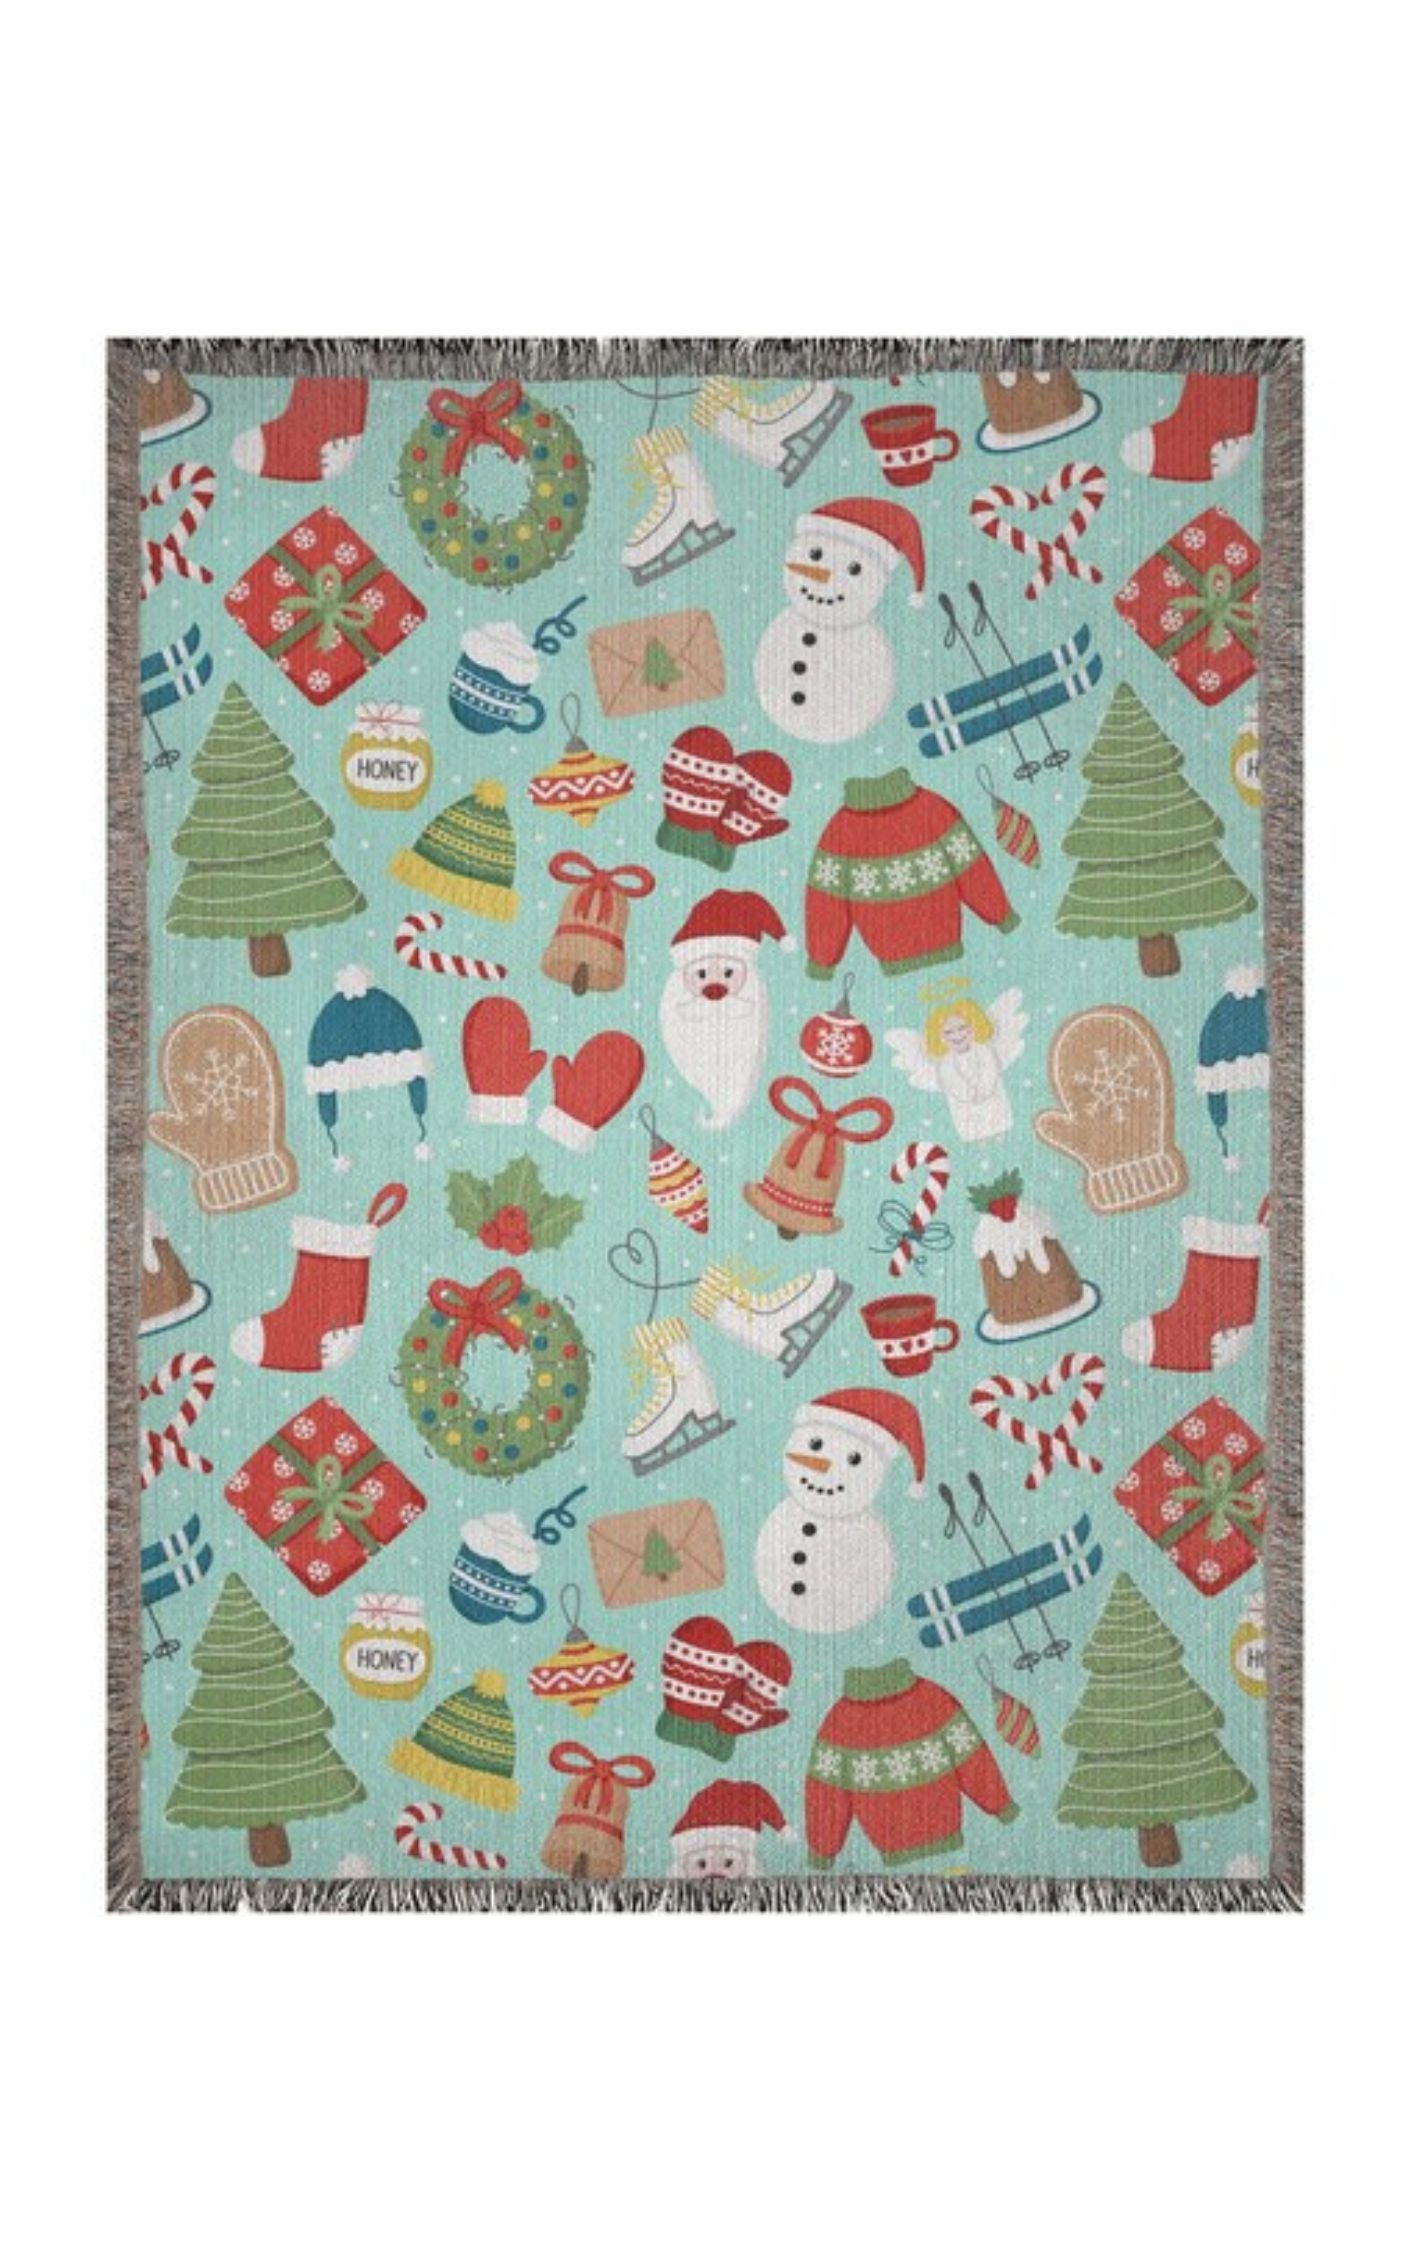 Christmas woven blanket 50x60” clearance